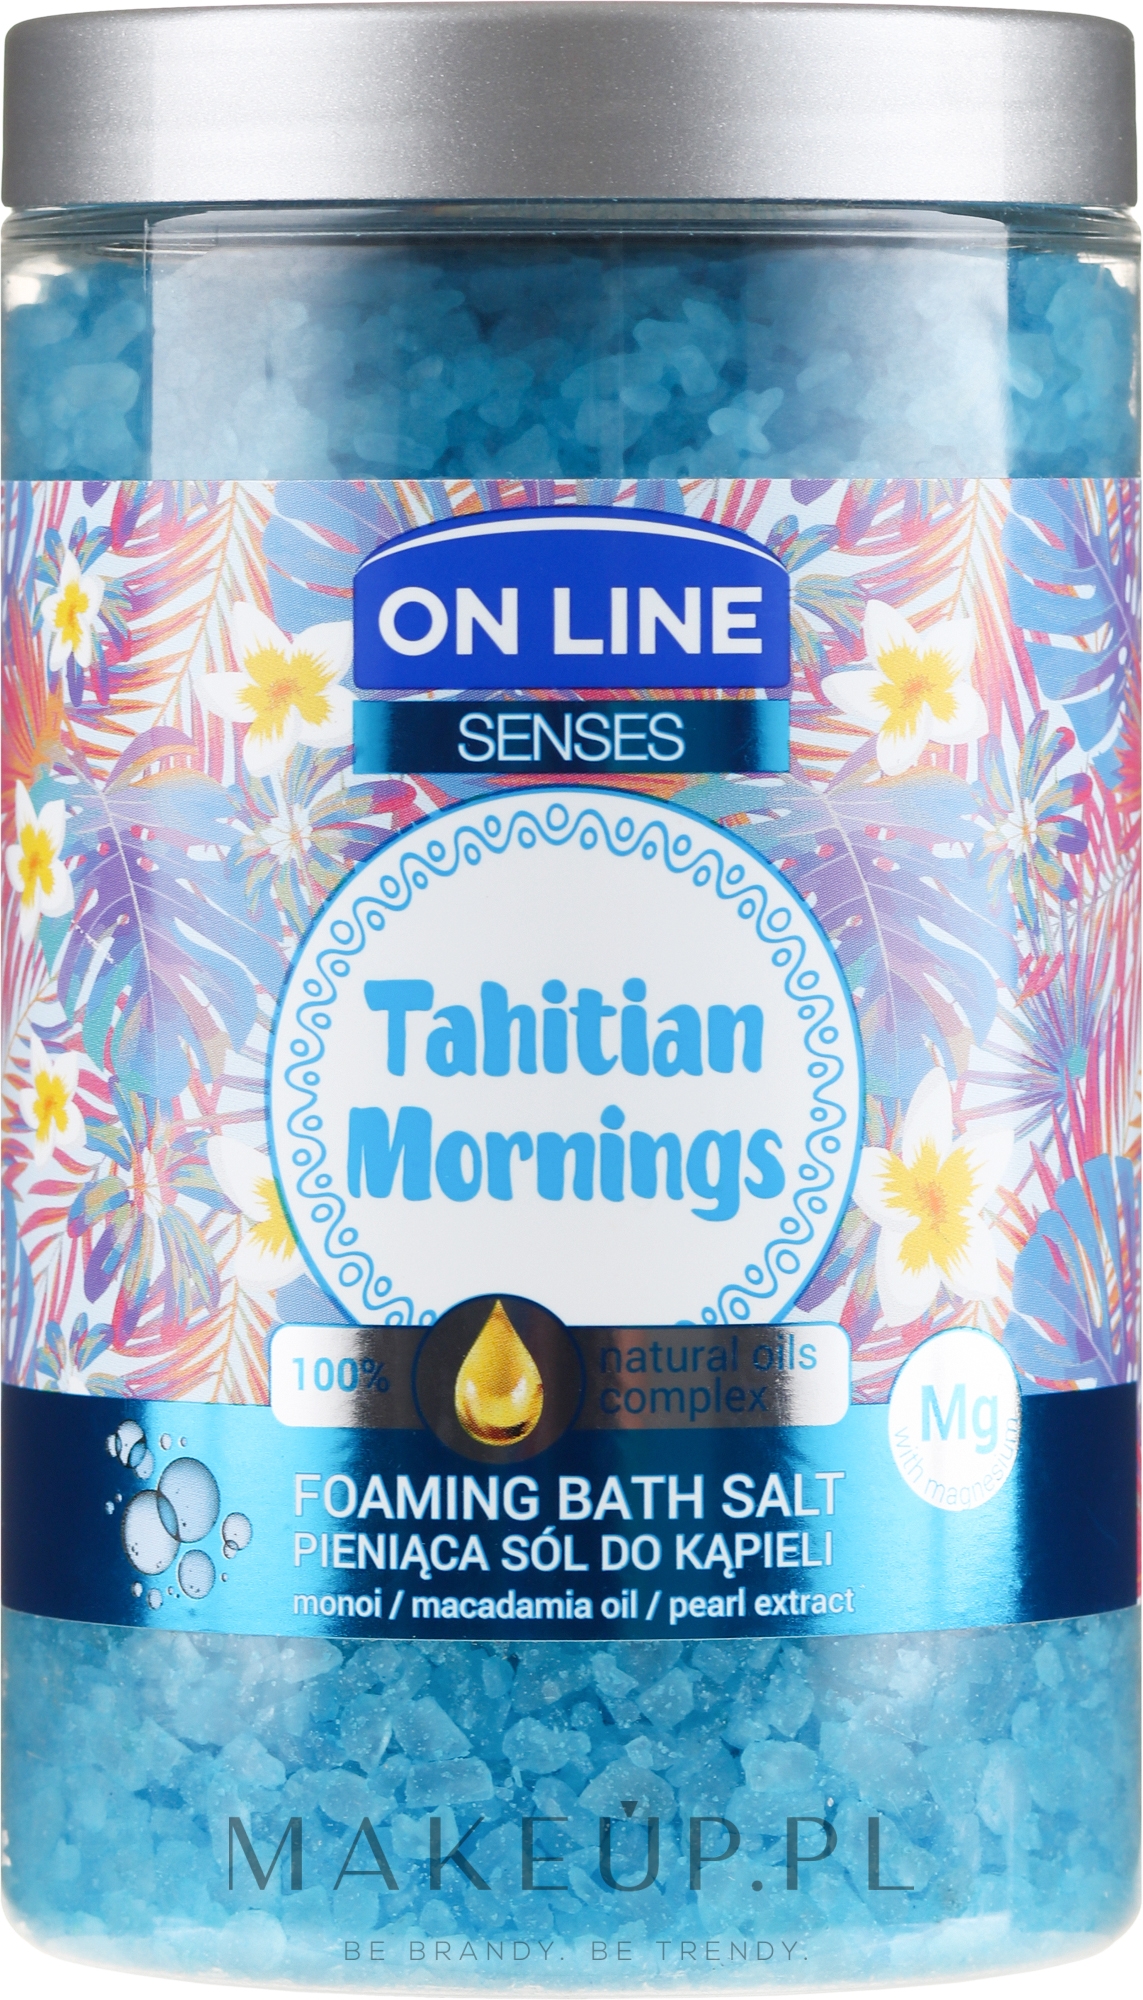 Pieniąca sól do kąpieli z olejami monoi i makadamia - On Line Senses Tahitian Mornings — Zdjęcie 480 g